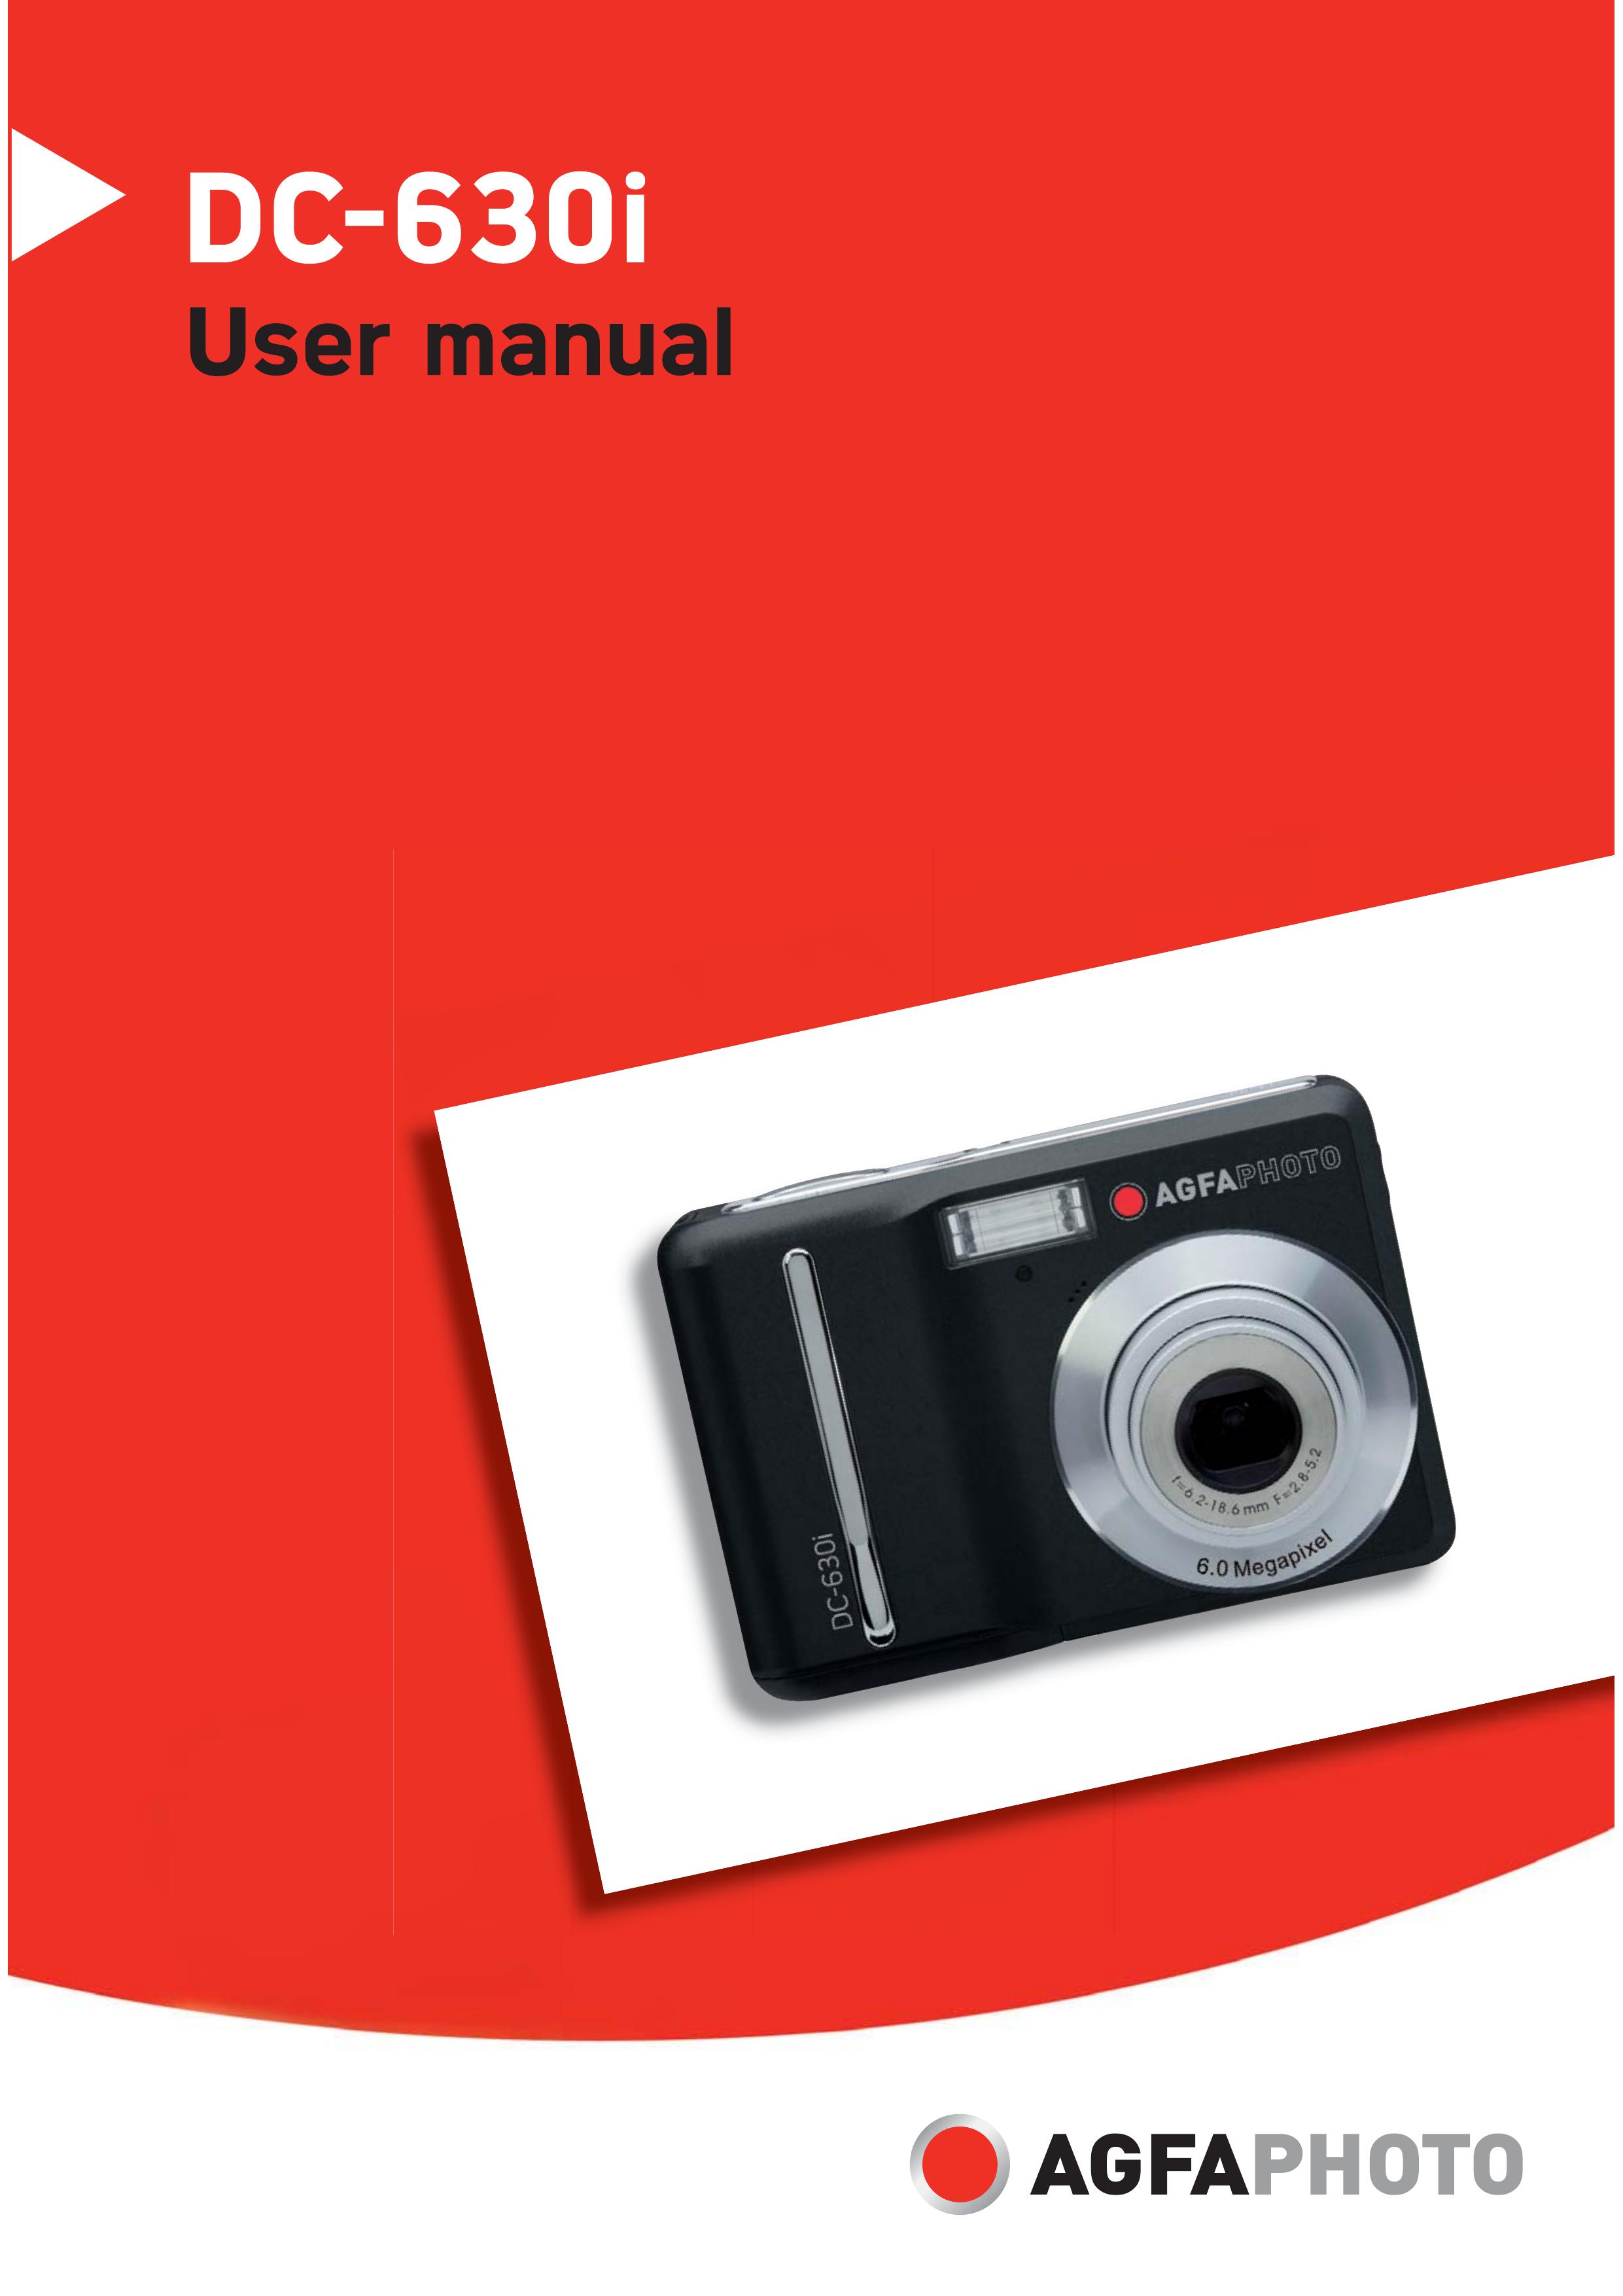 AGFA DC-630i Digital Camera User Manual